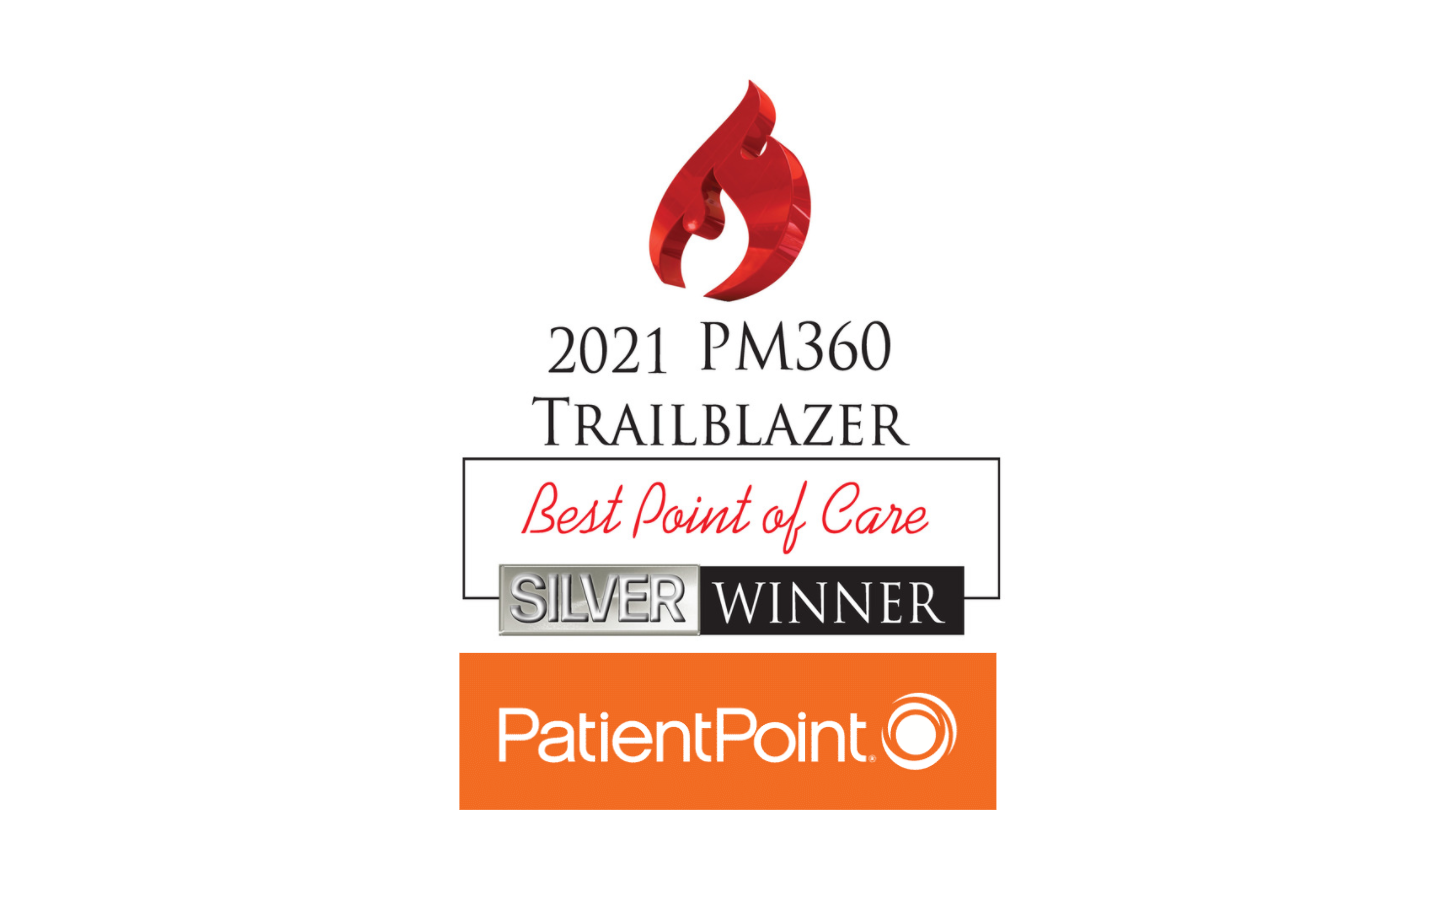 Stacked 2021 PM360 Trailblazer Award Winner logo and PatientPoint logo